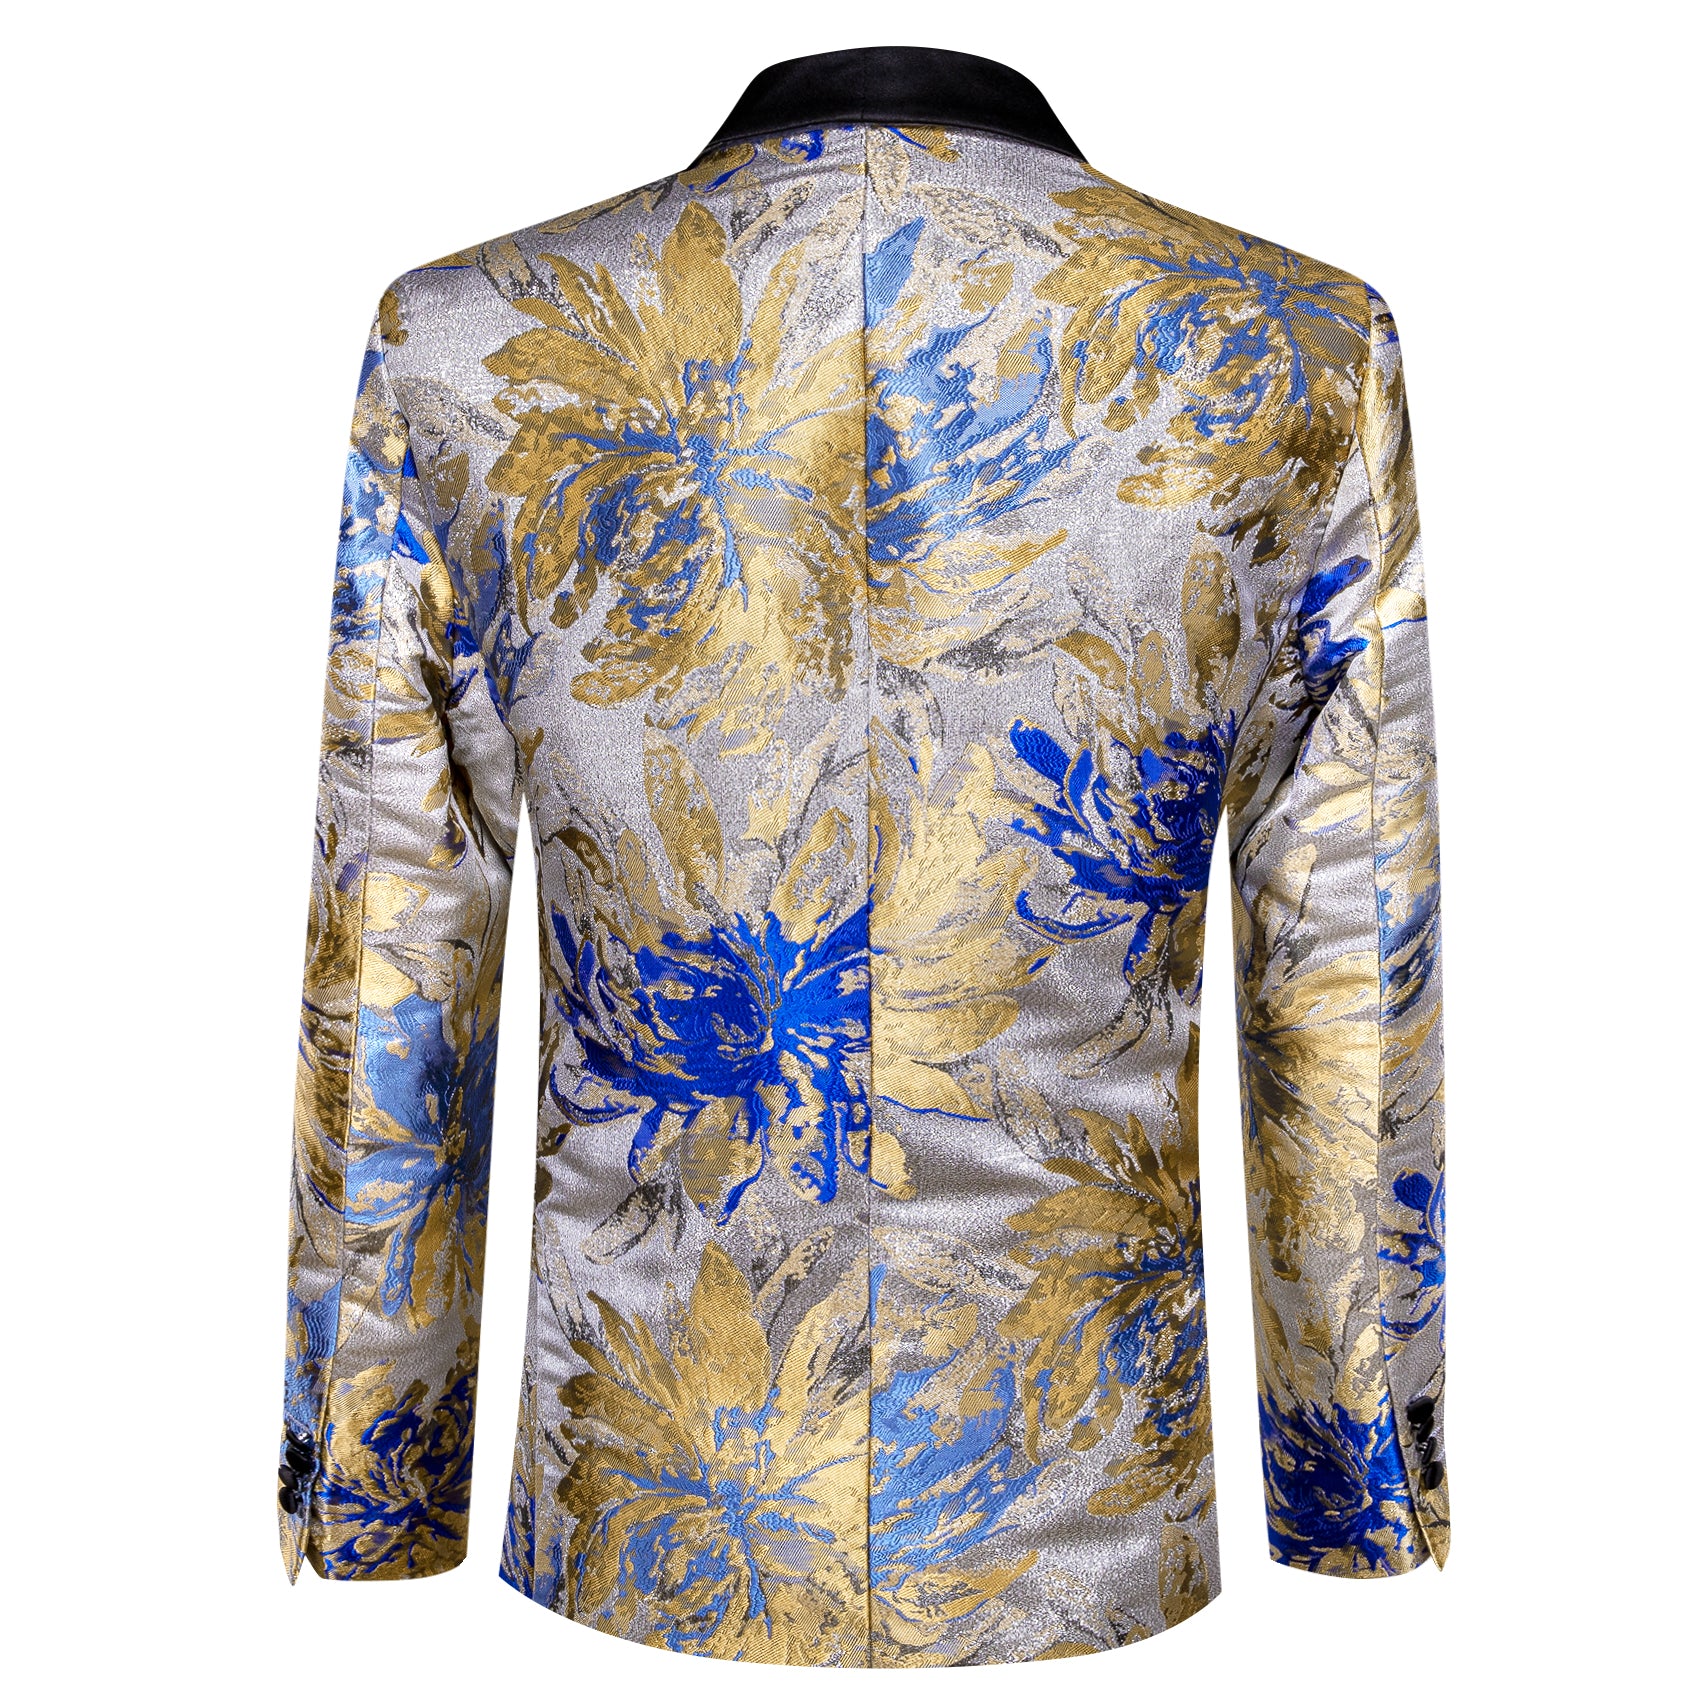 Barry.wang Men's Suit Silver Blue Floral Shawl Collar Suit Jacket